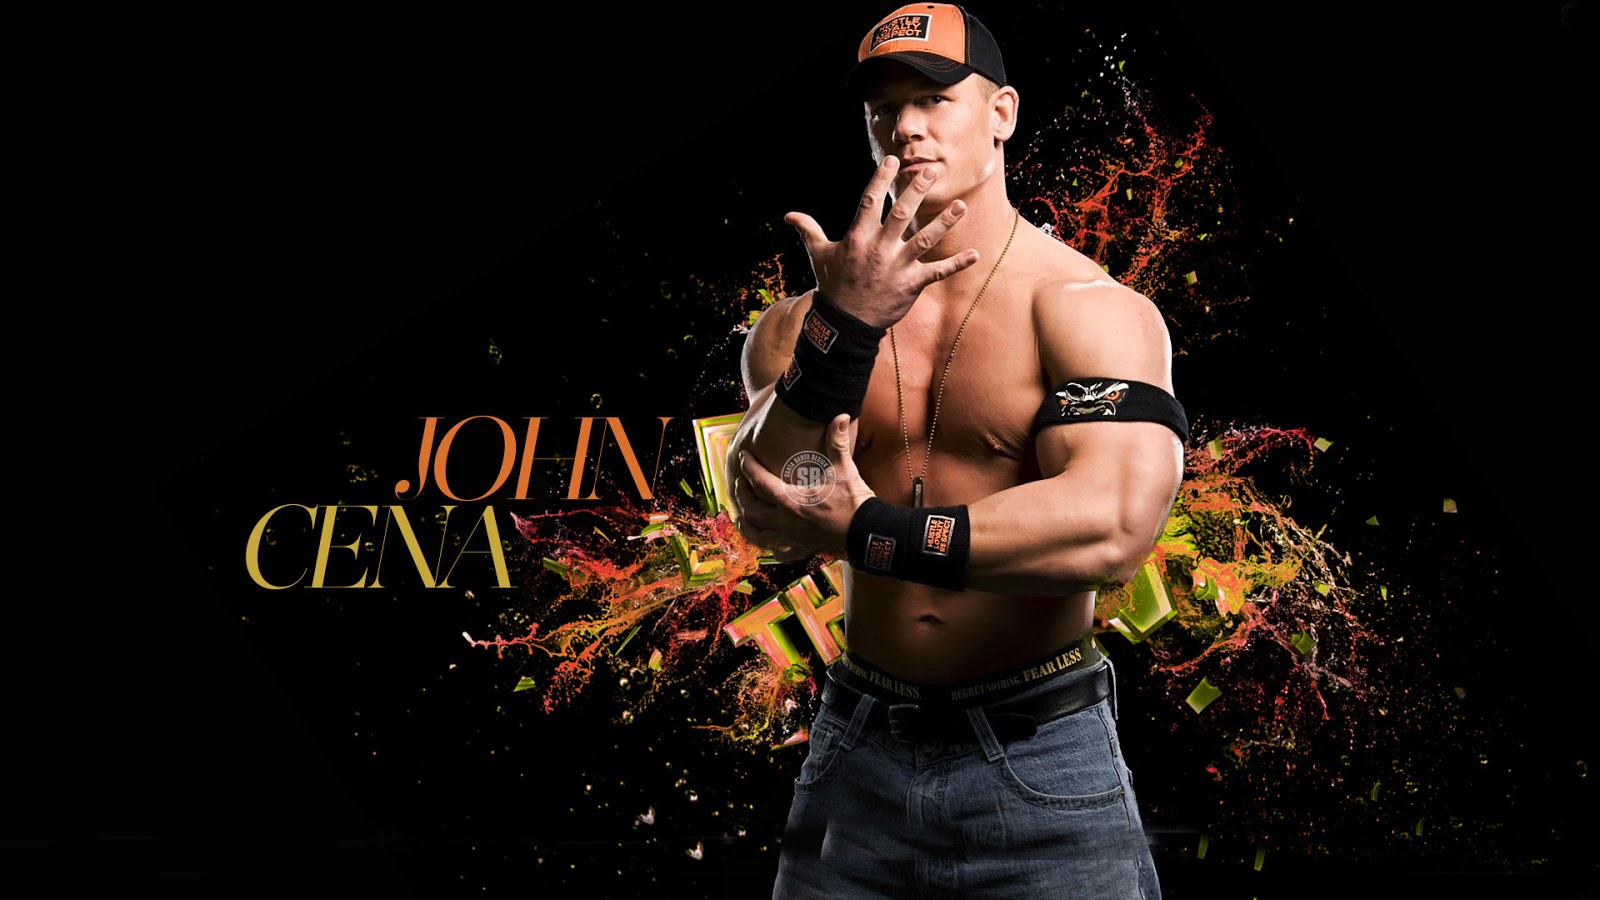 Jone Cena Hd Wallpaper - Wwe John Cena Posters - HD Wallpaper 